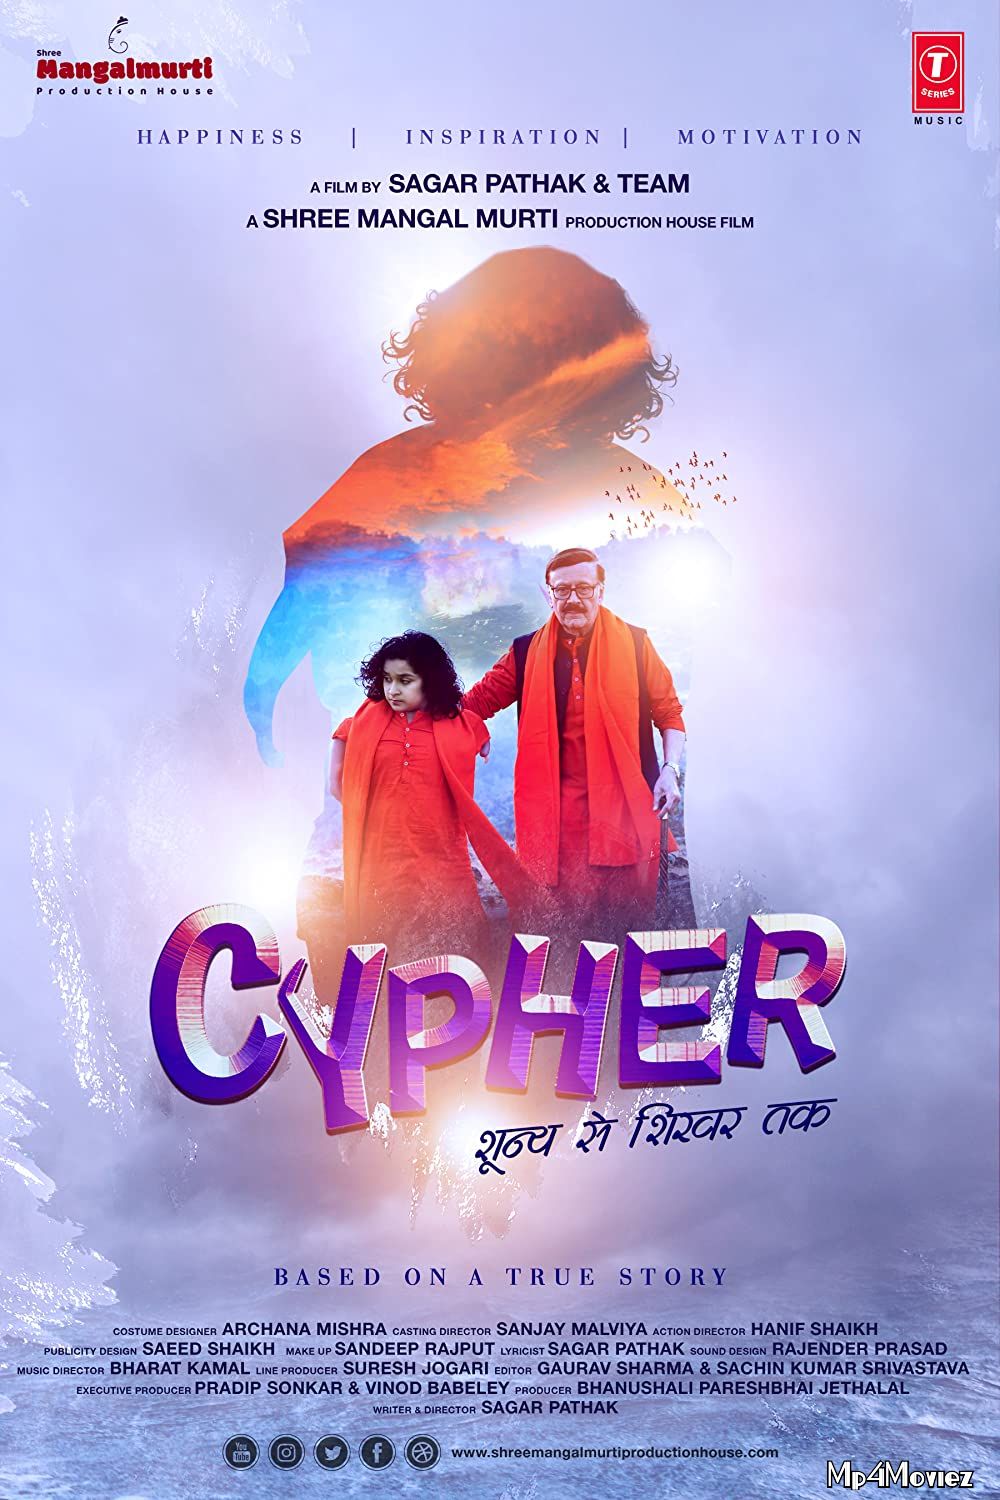 Cypher Shoonya Se Shikhar Tak (2019) Hindi HDRip download full movie